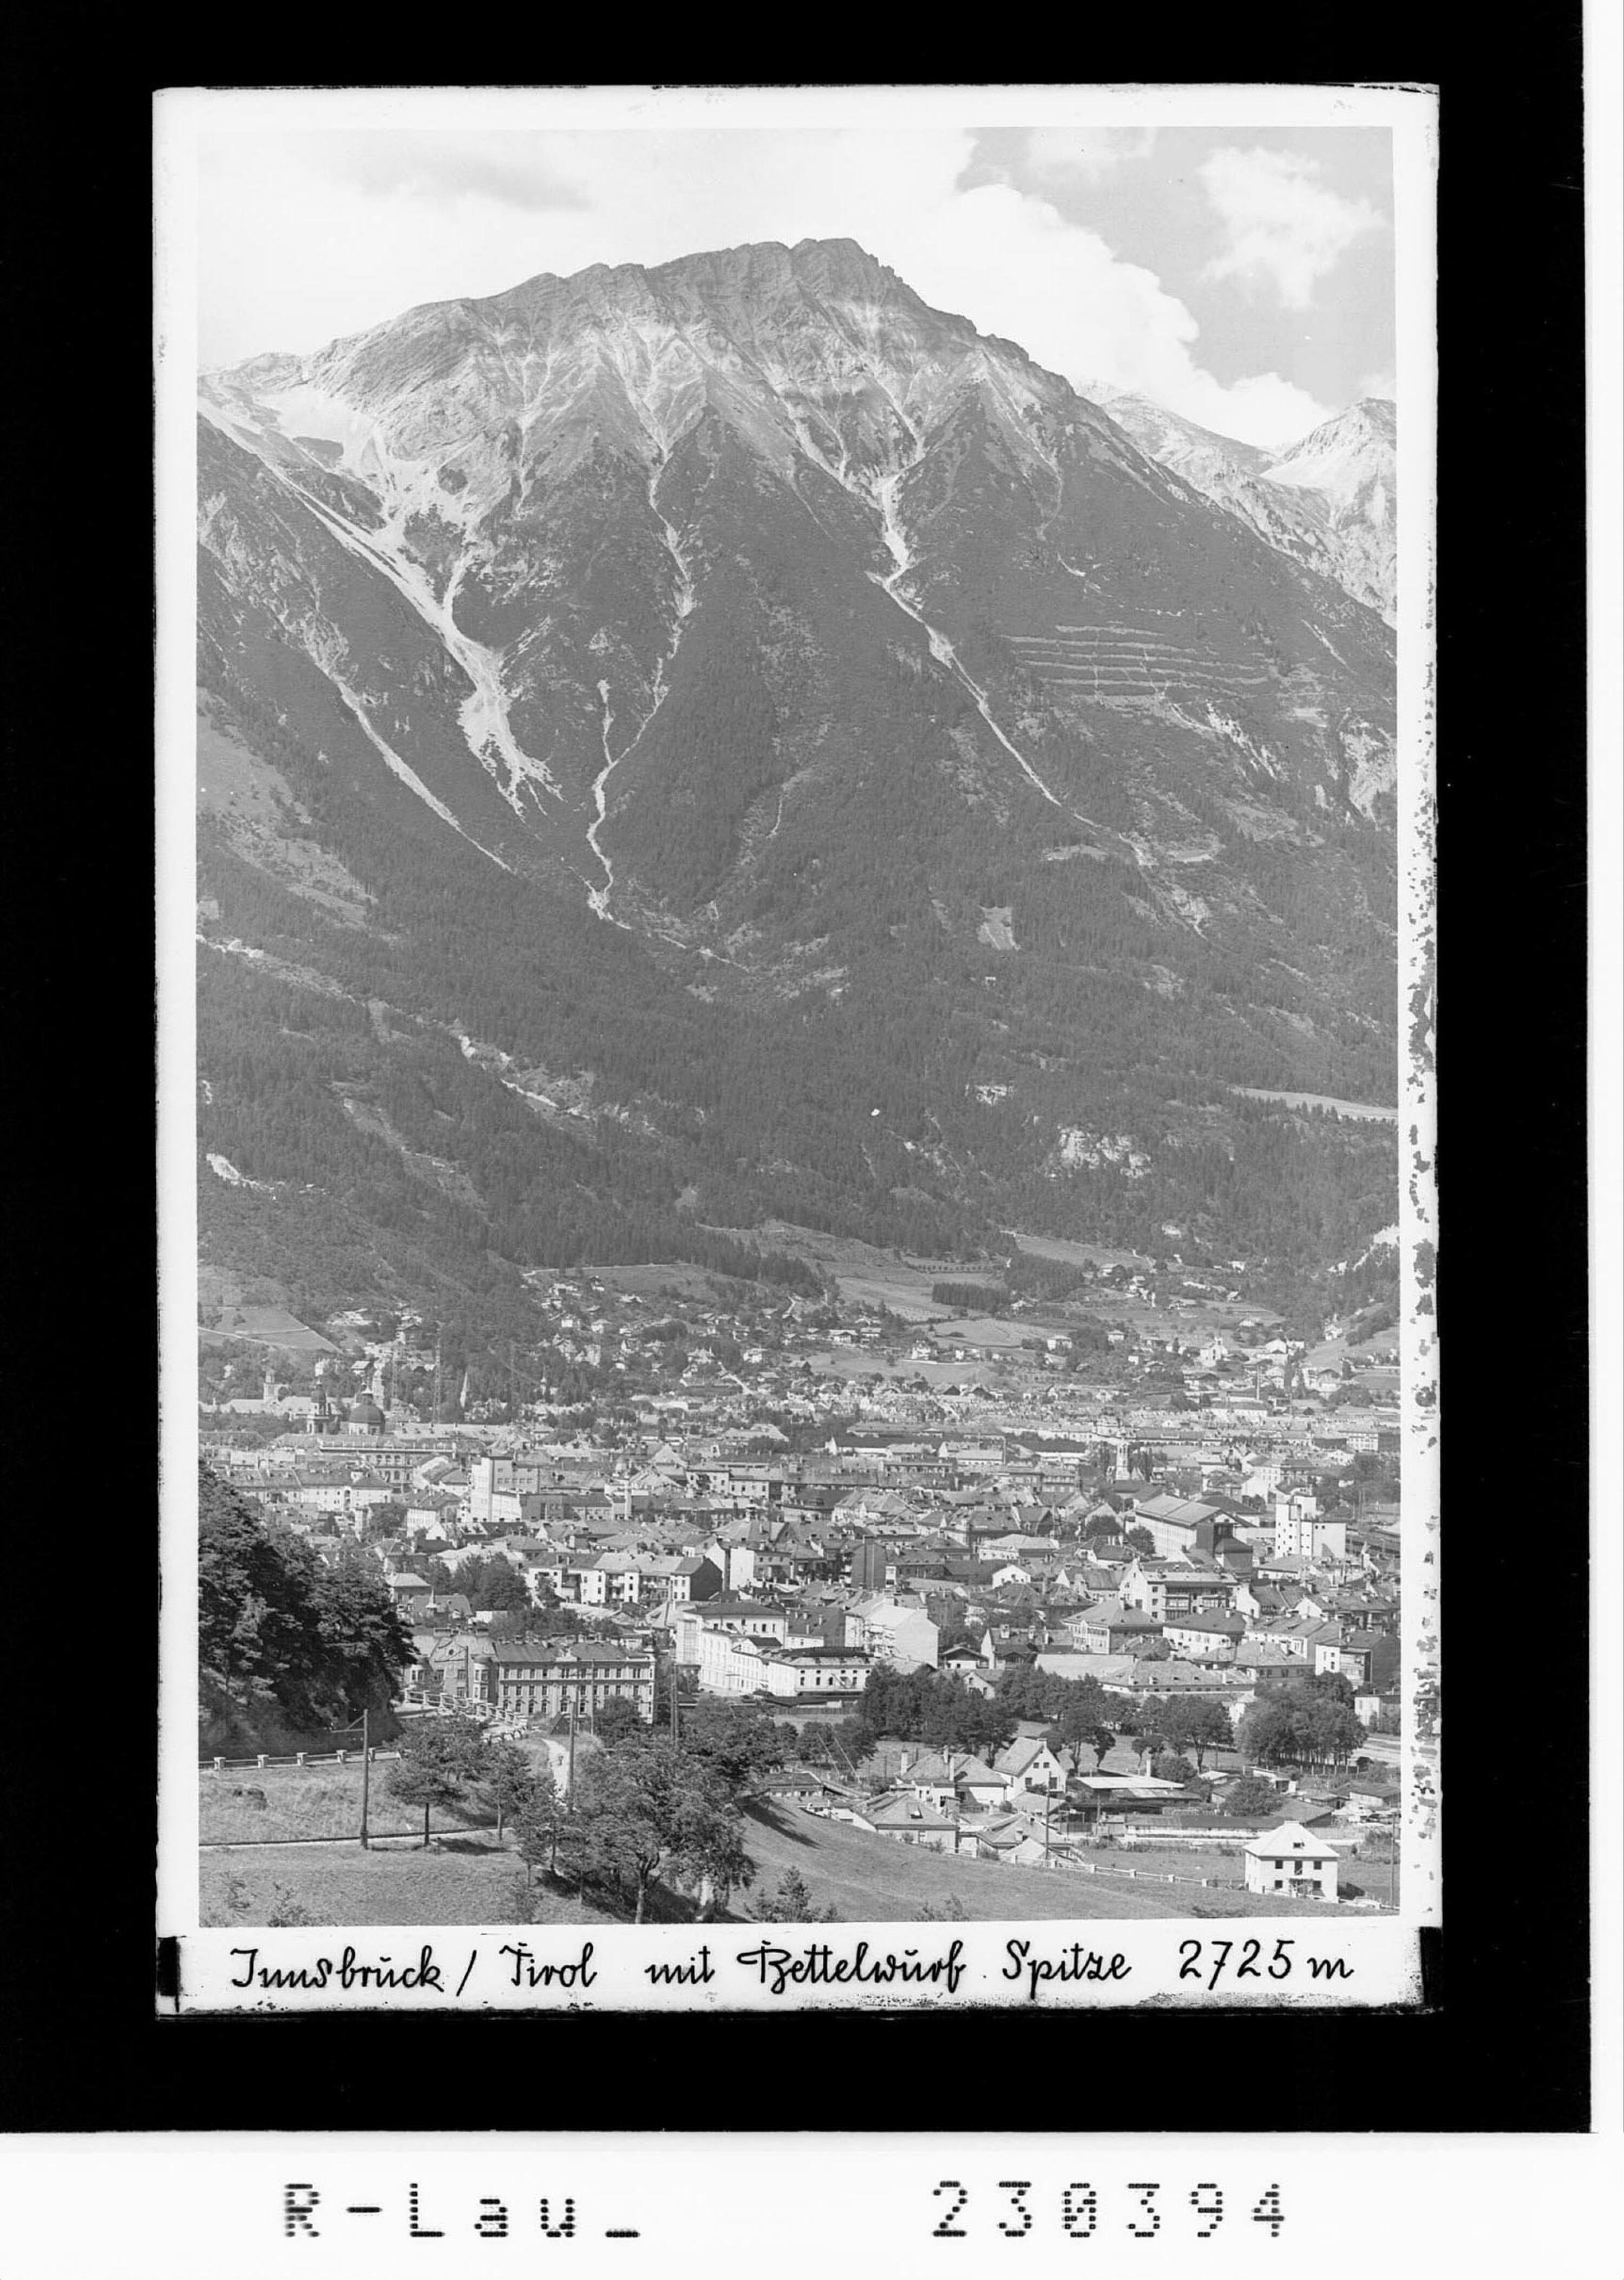 Innsbruck / Tirol mit Bettelwurf Spitze 2725 m></div>


    <hr>
    <div class=